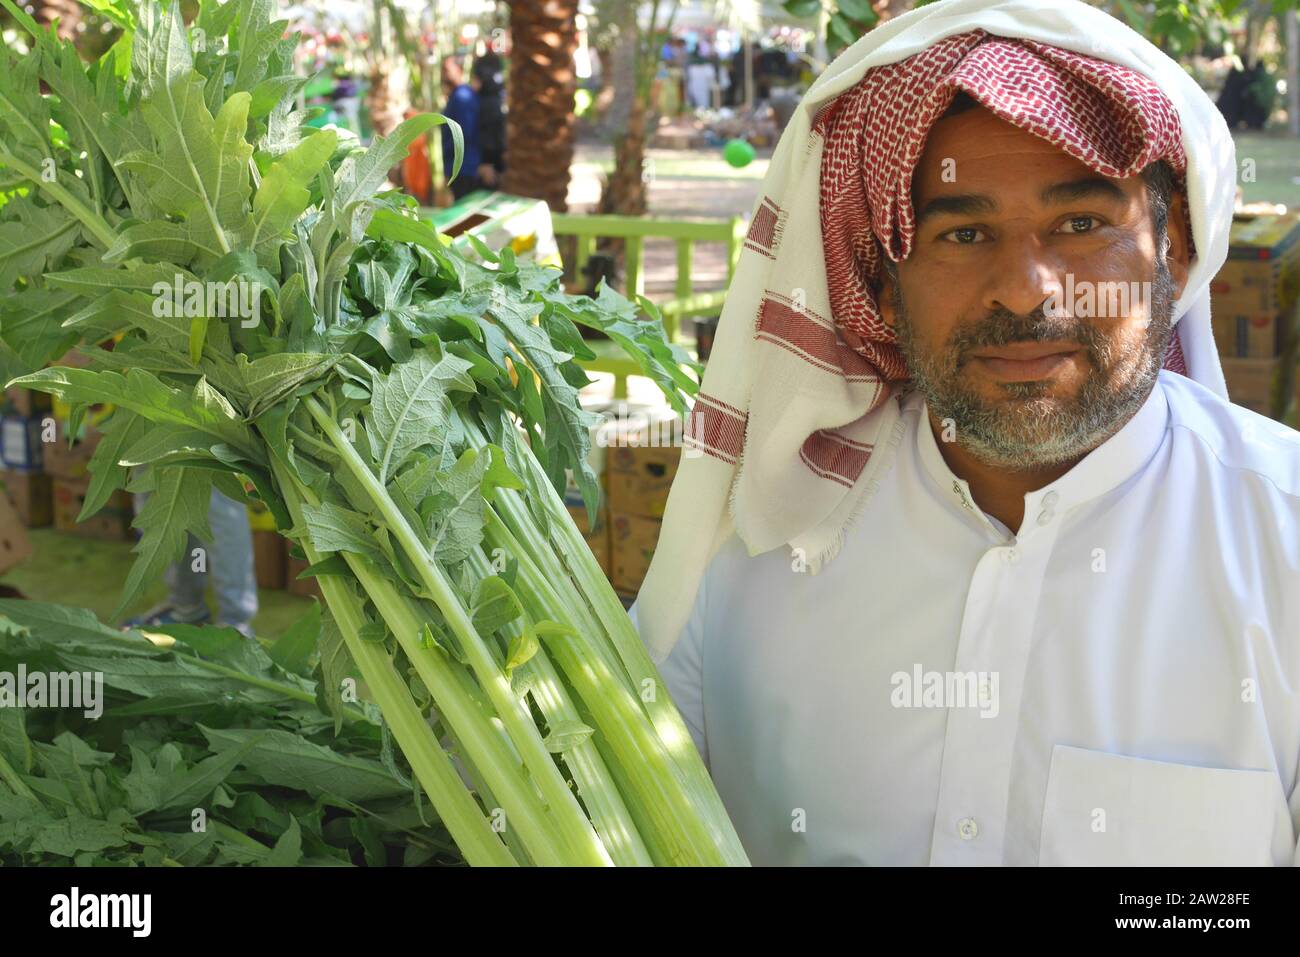 Bahraini stallholder selling cardoon, artichoke thistle, farmers market, Budaiya, Kingdom of Bahrain Stock Photo